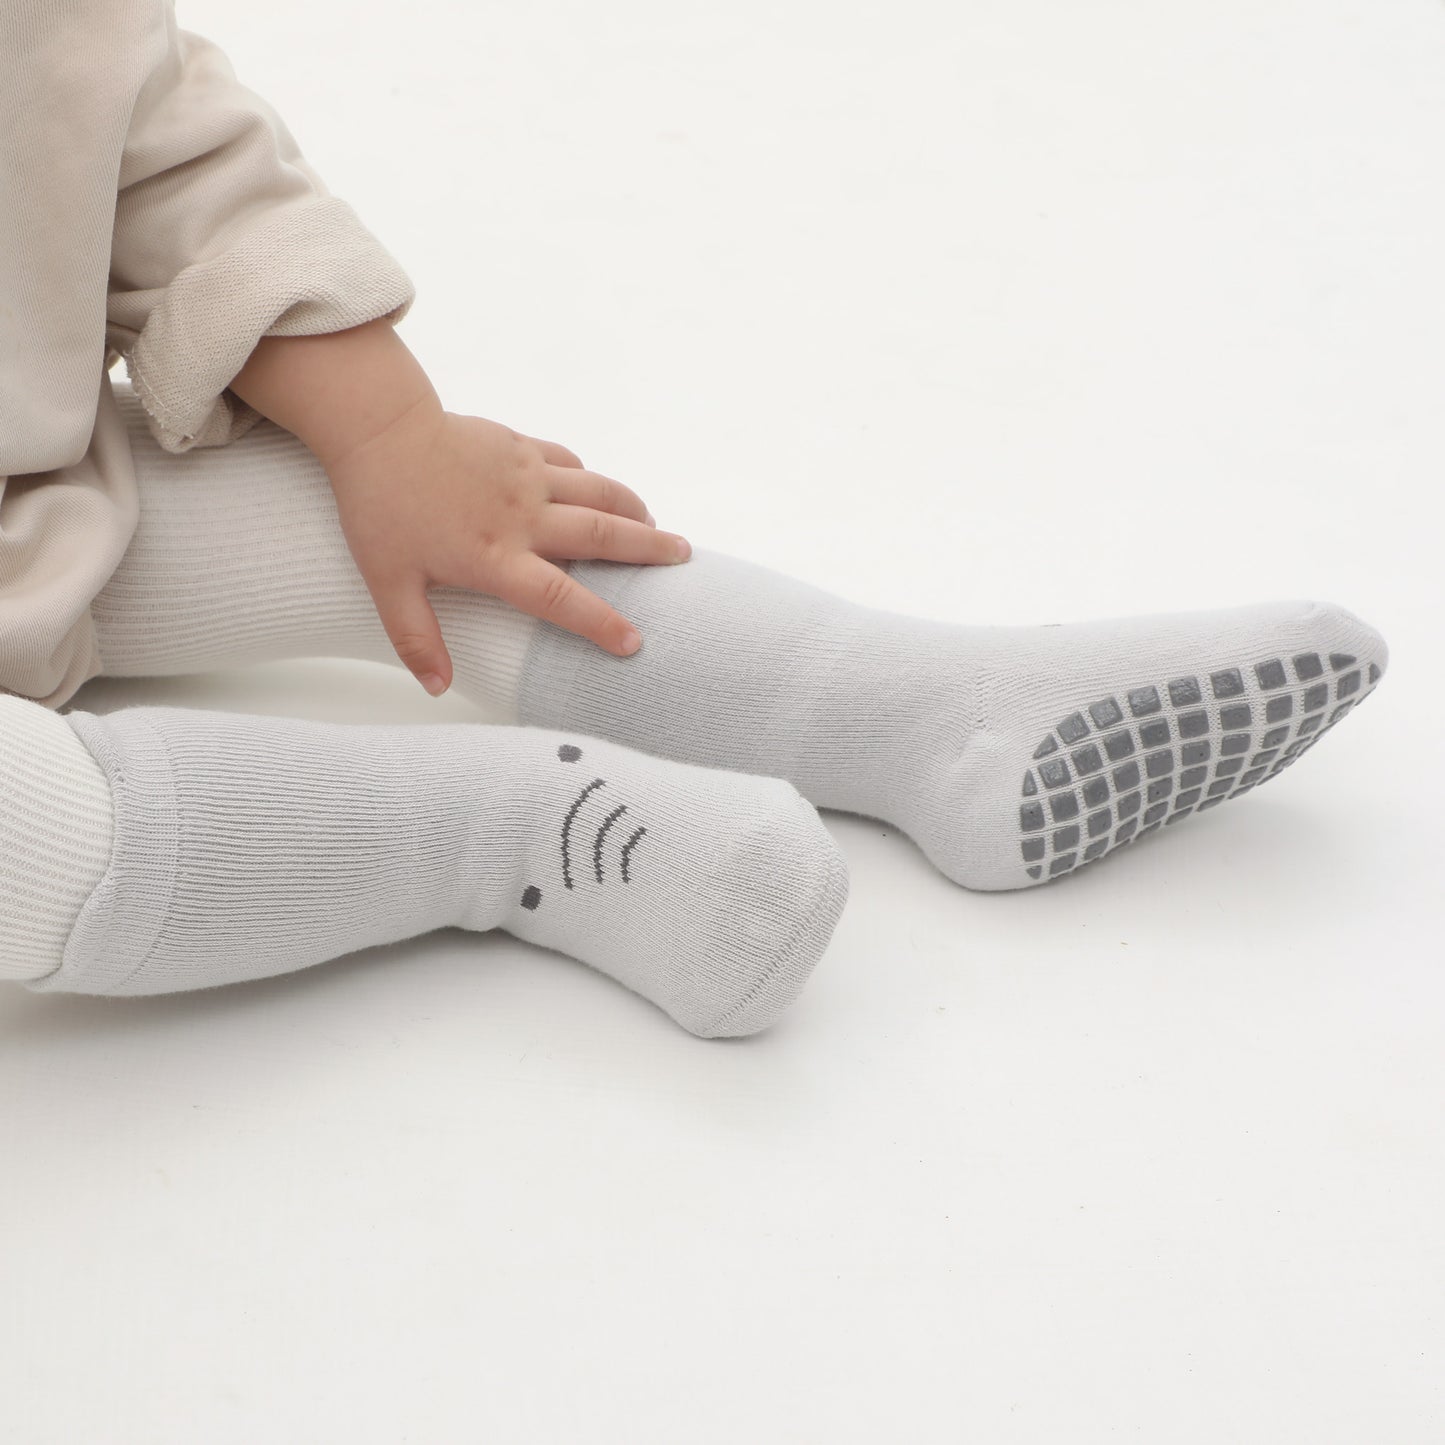 How to Buy Safe Socks for Babies & Kids